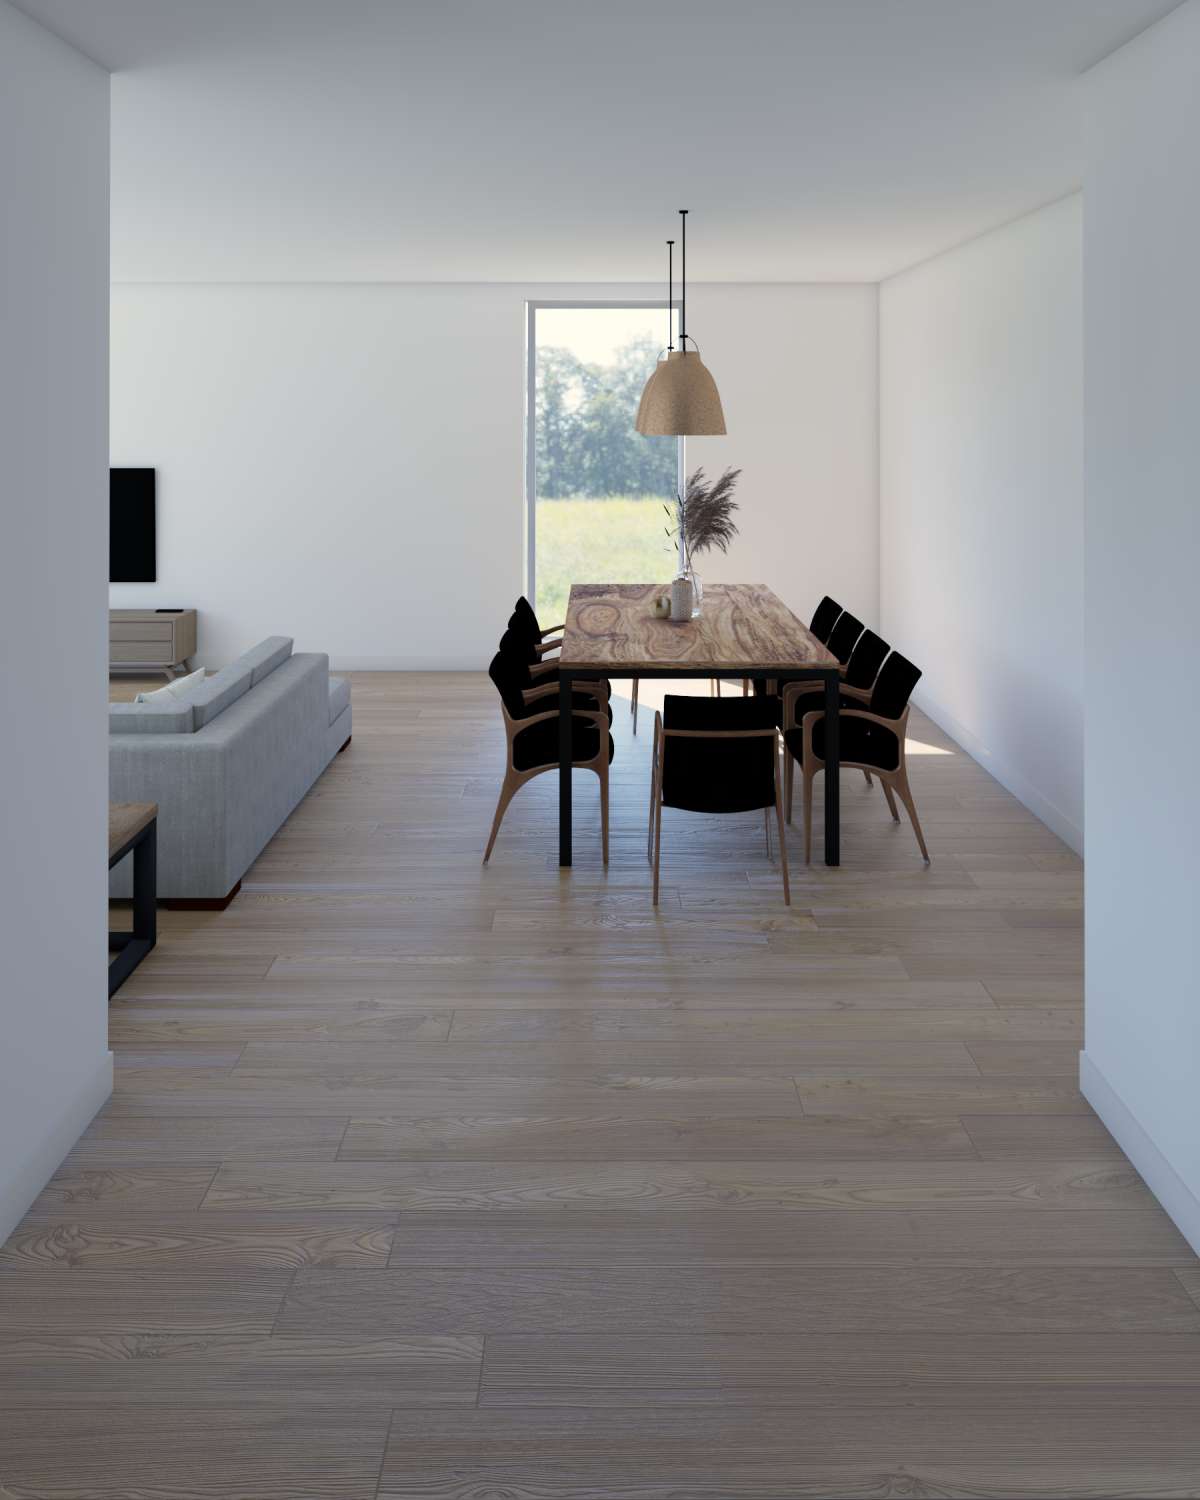 Mariana Formigal Interior Design - Lisboa - Designer de Interiores